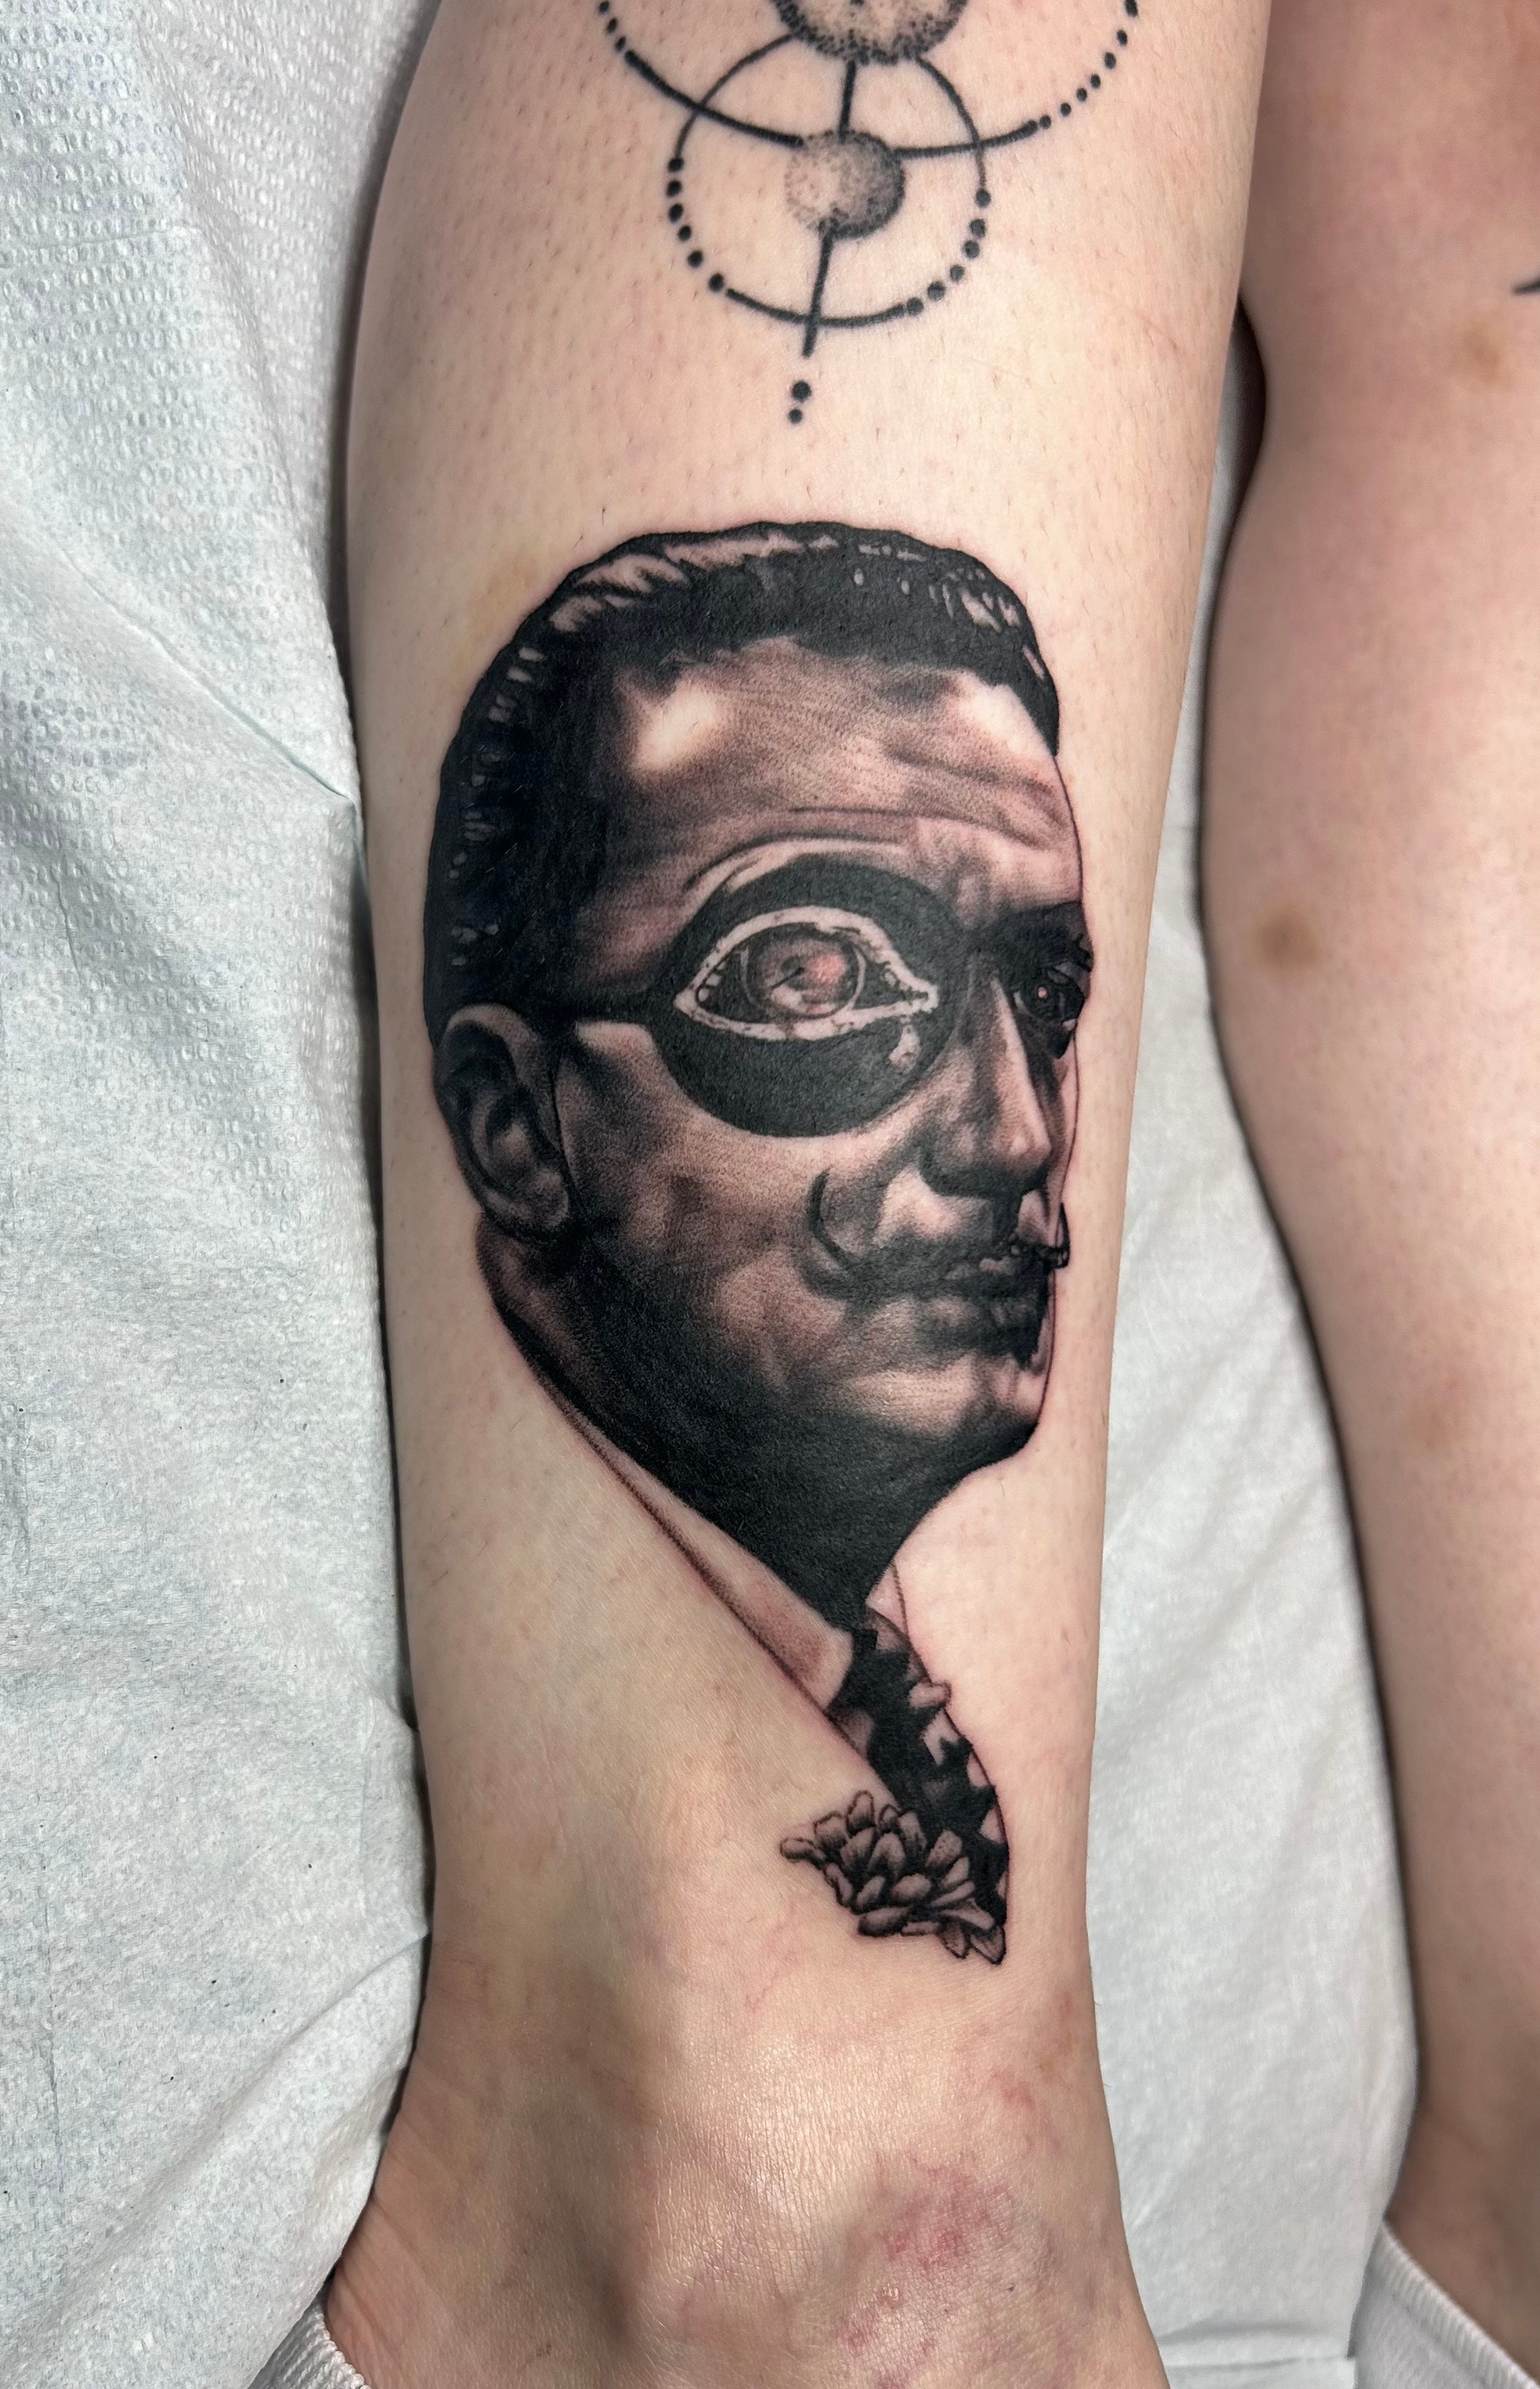 Some newer stuff – Matt Cooley Tattoo